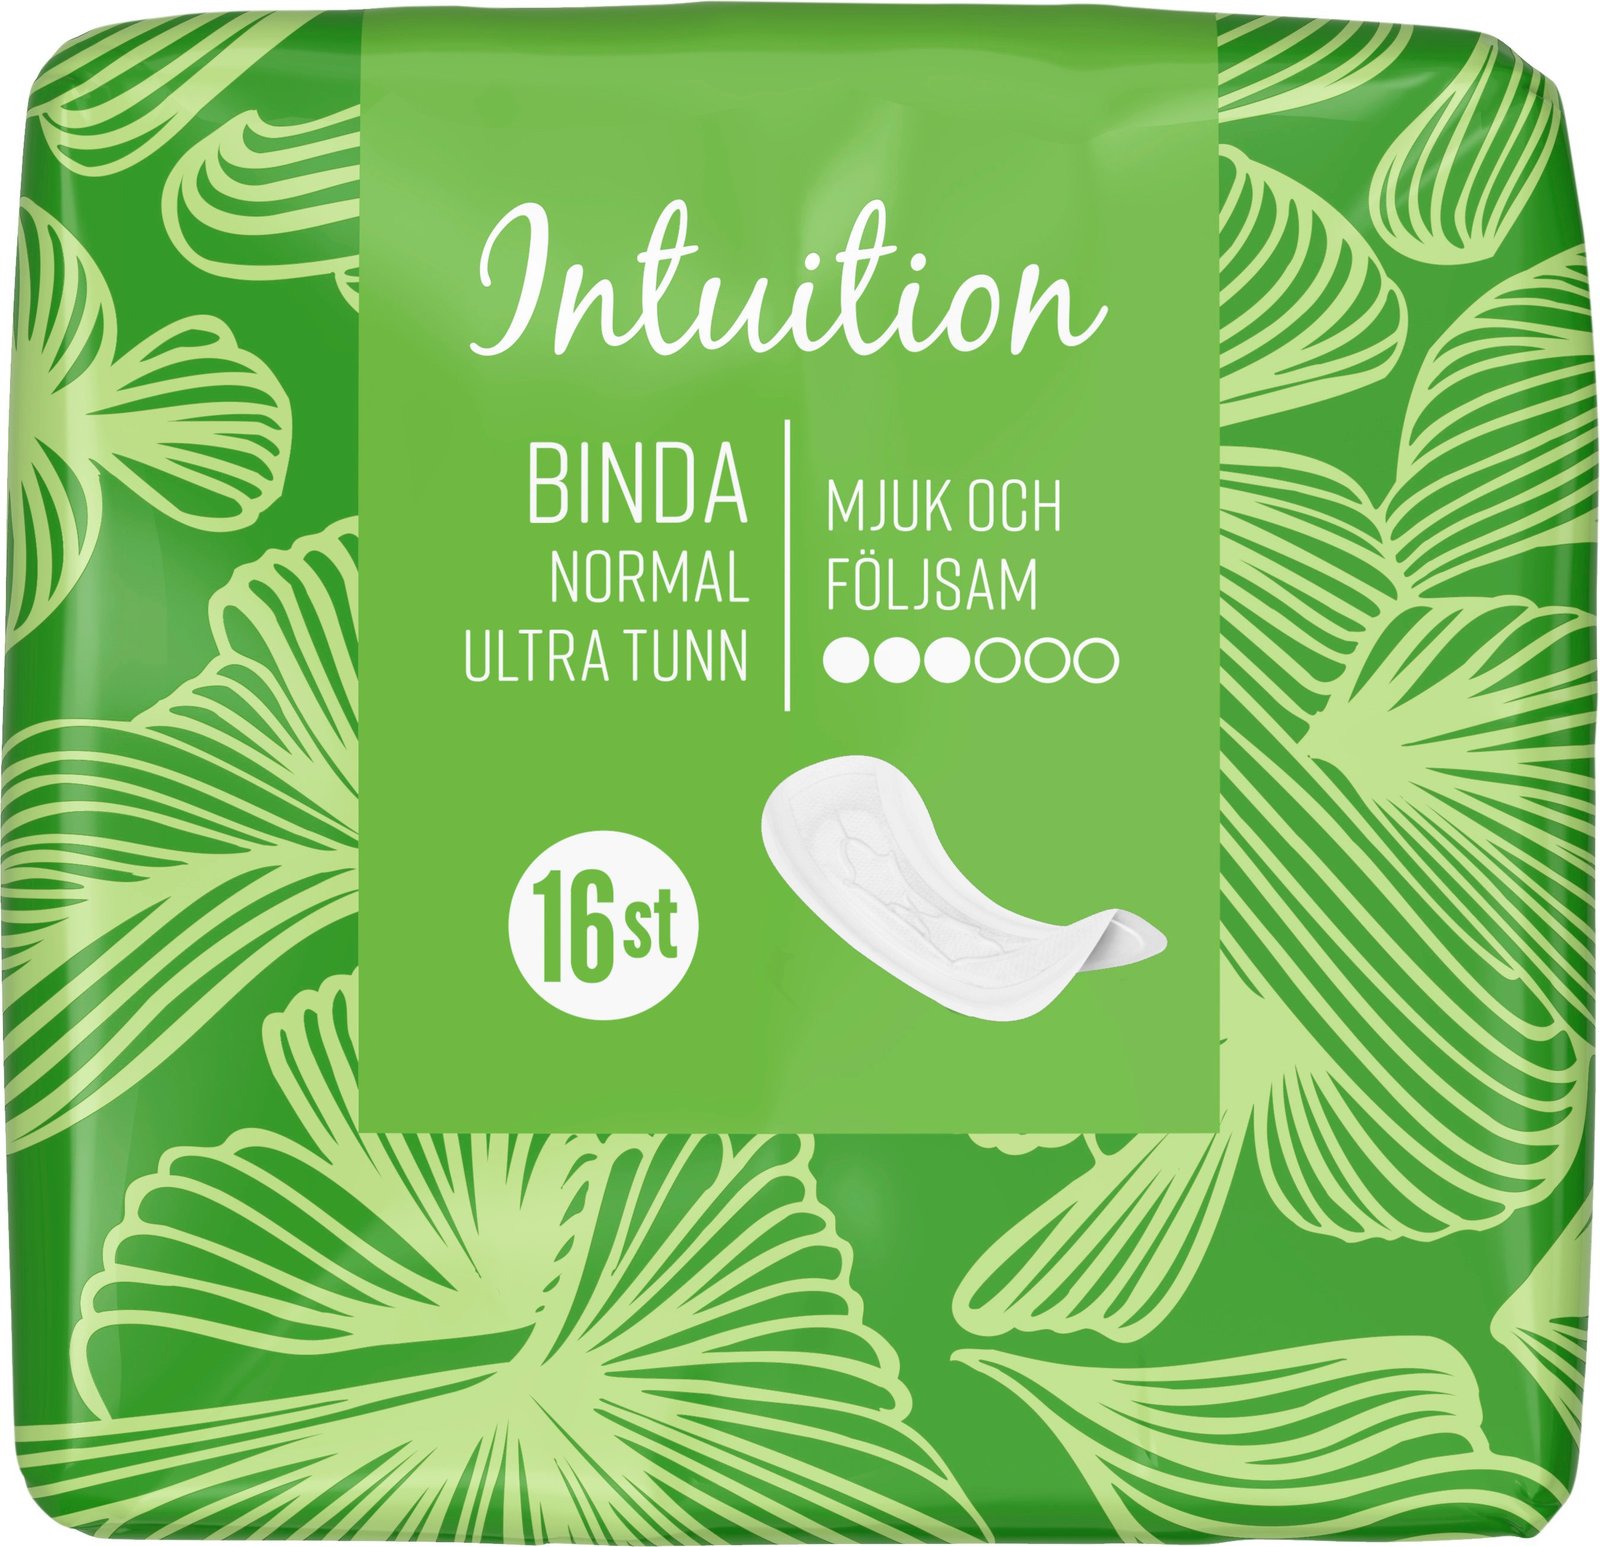 Intuition Binda Normal 16 st